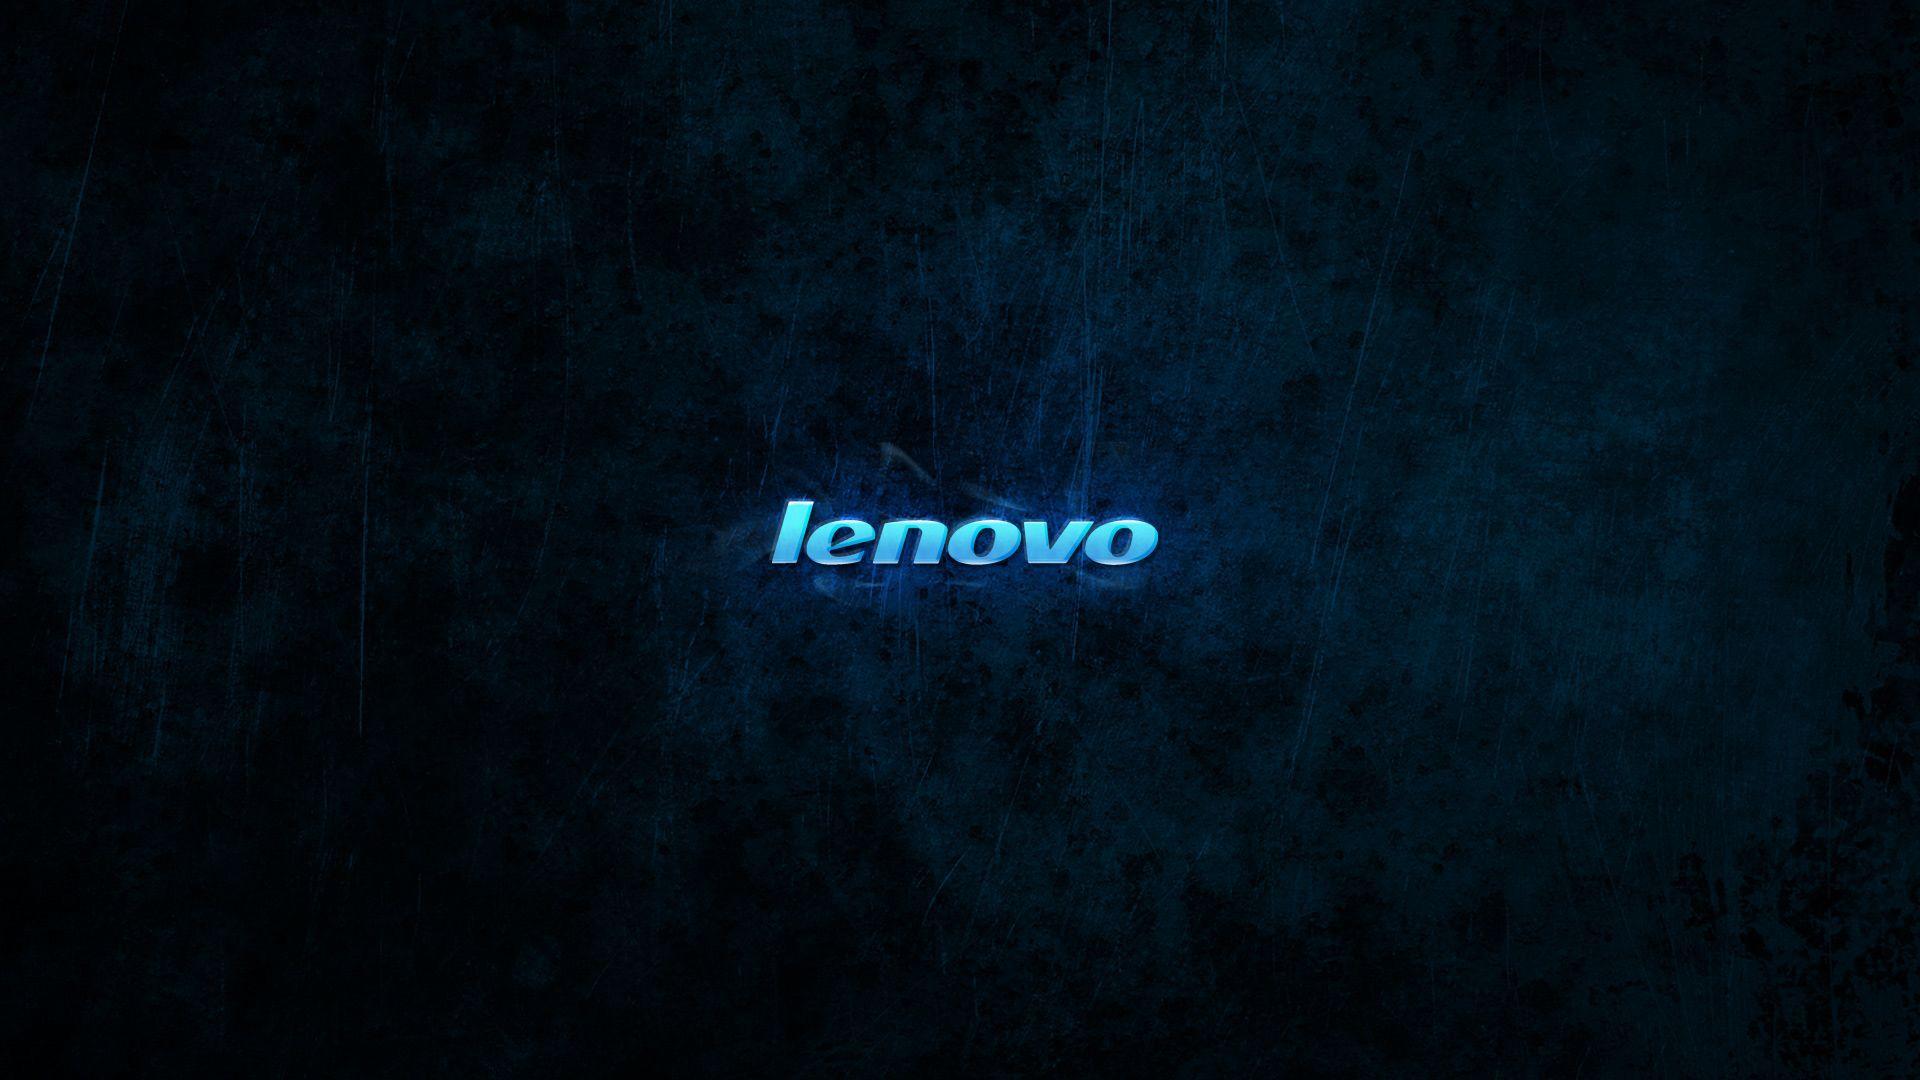 Lenovo Wallpaper Theme 1024×768 Lenovo Windows 7 Wallpaper 39